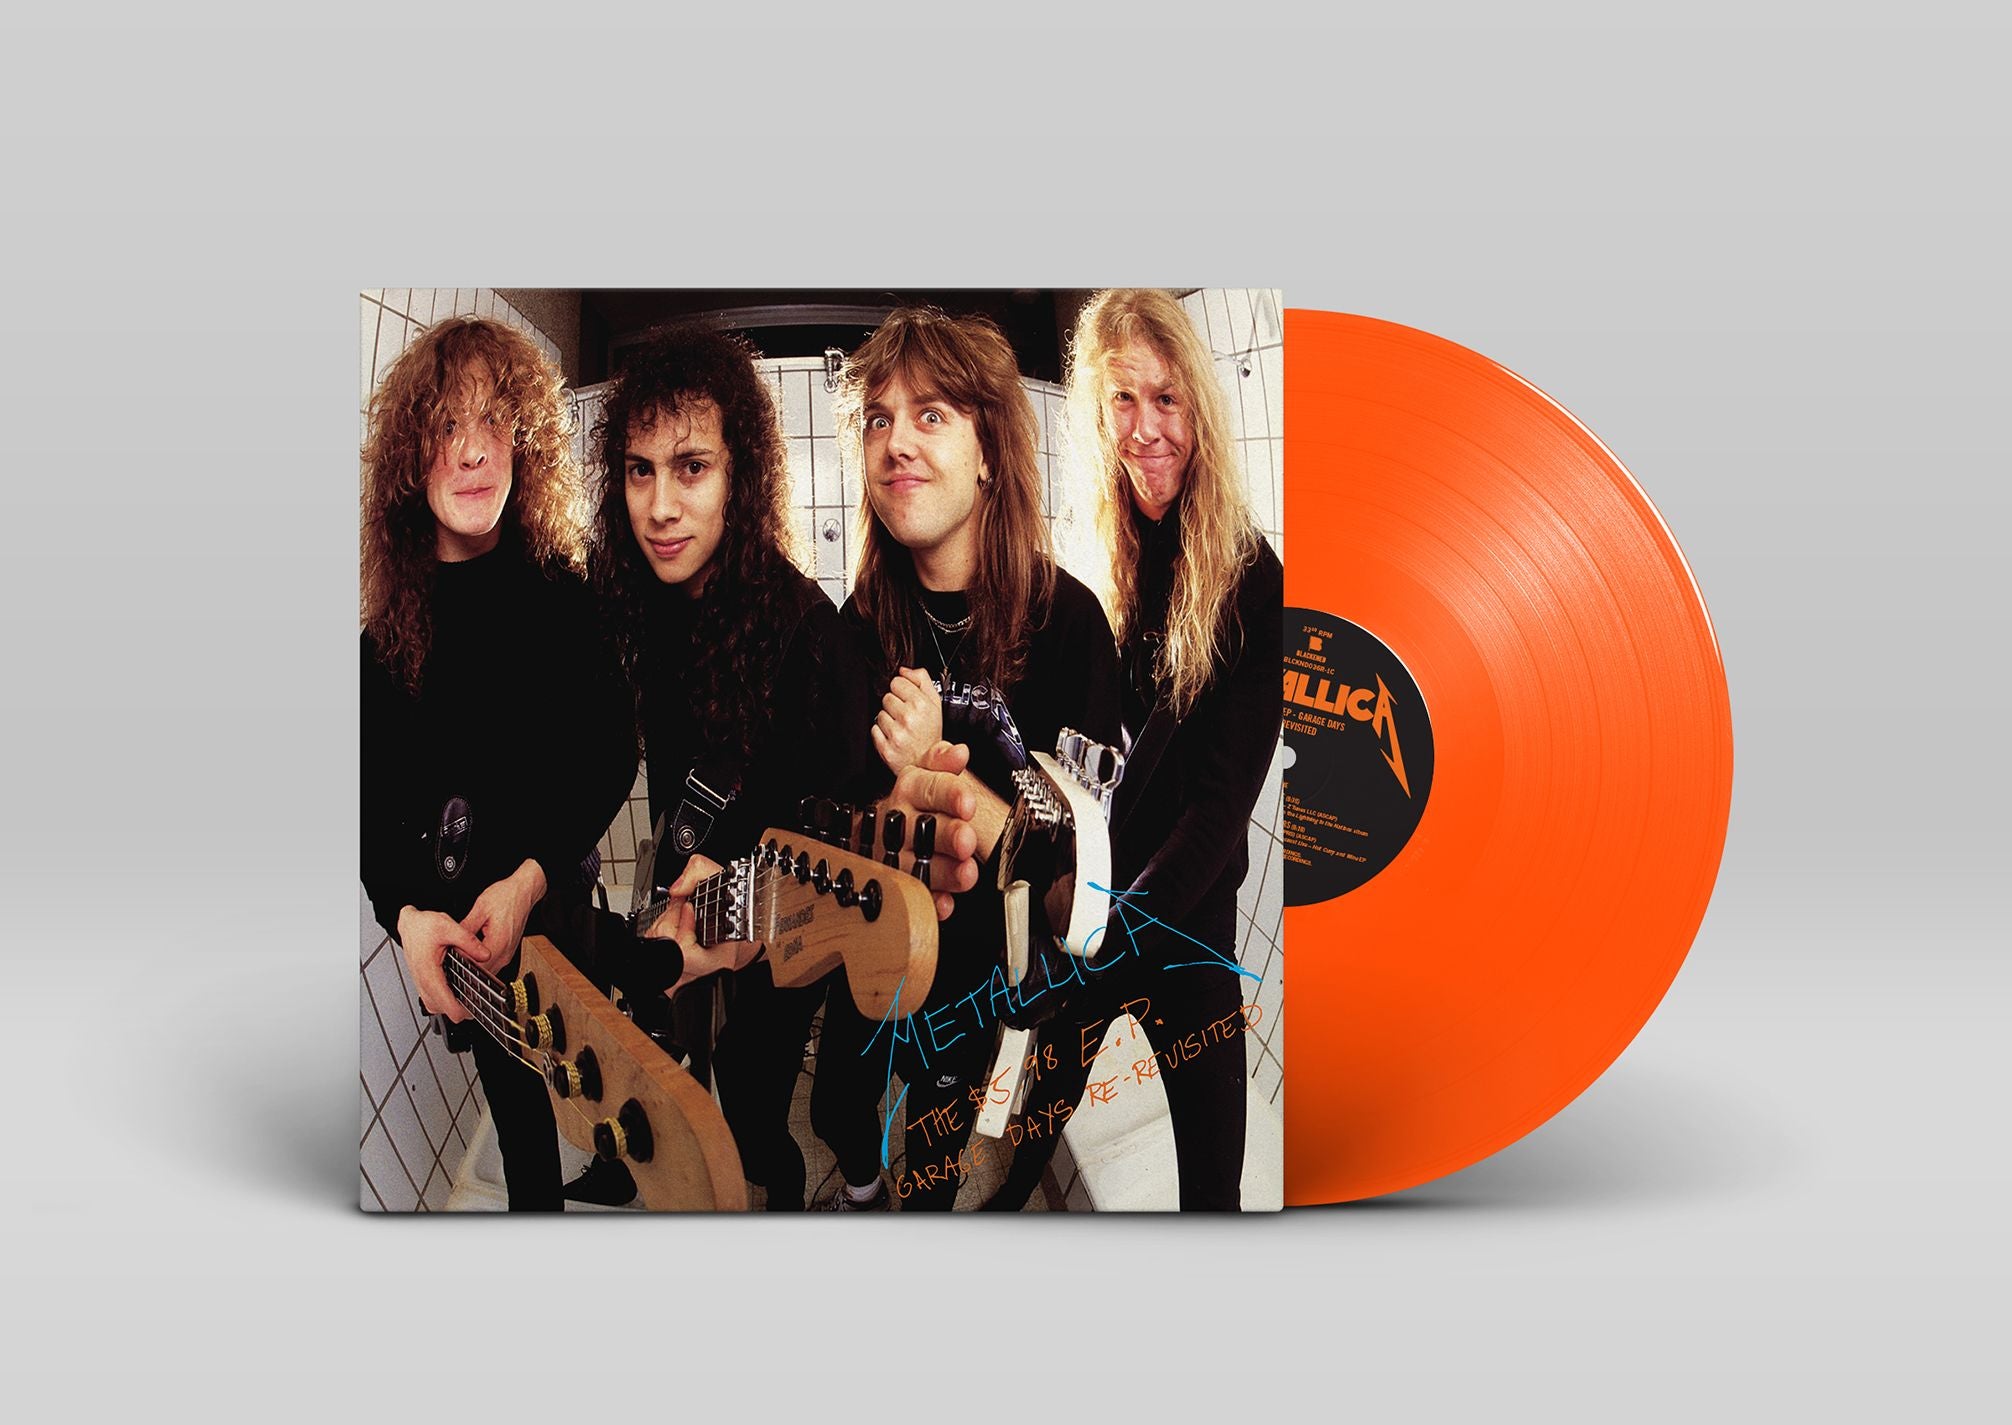 Metallica - The $5.98 E.P. - Garage Days Re-Revisited [Indie-Exclusive Orange Vinyl]